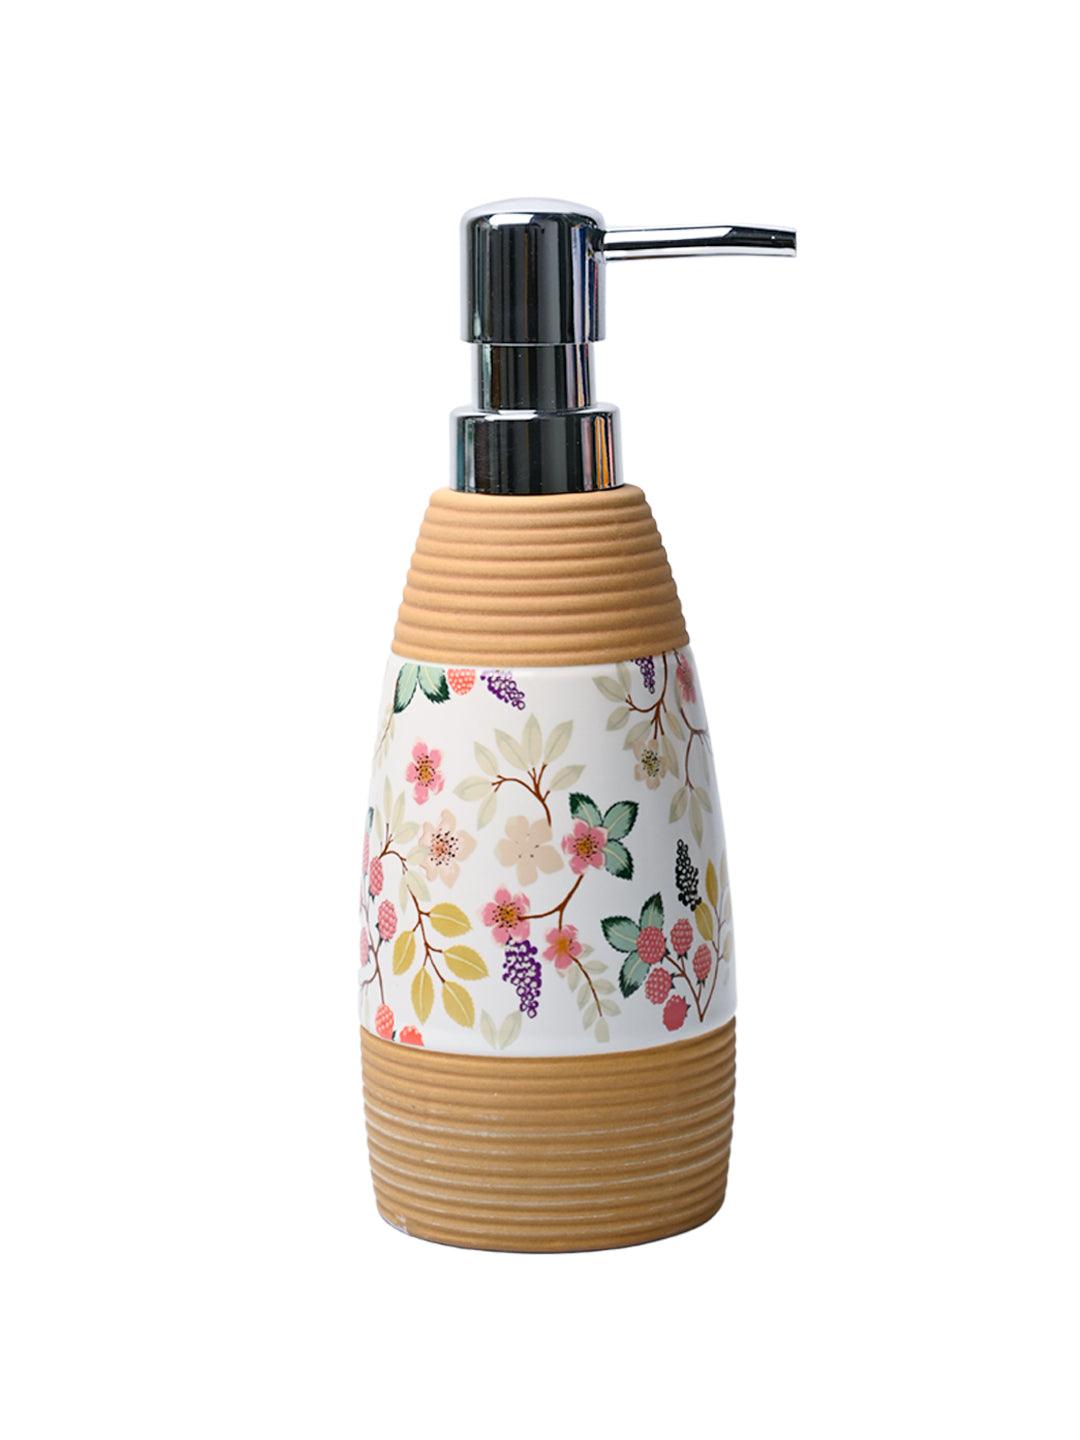 Multicolor Ceramic Cylindrical Bathroom Set Of 4 - Floral Design, Bath Accessories - MARKET99